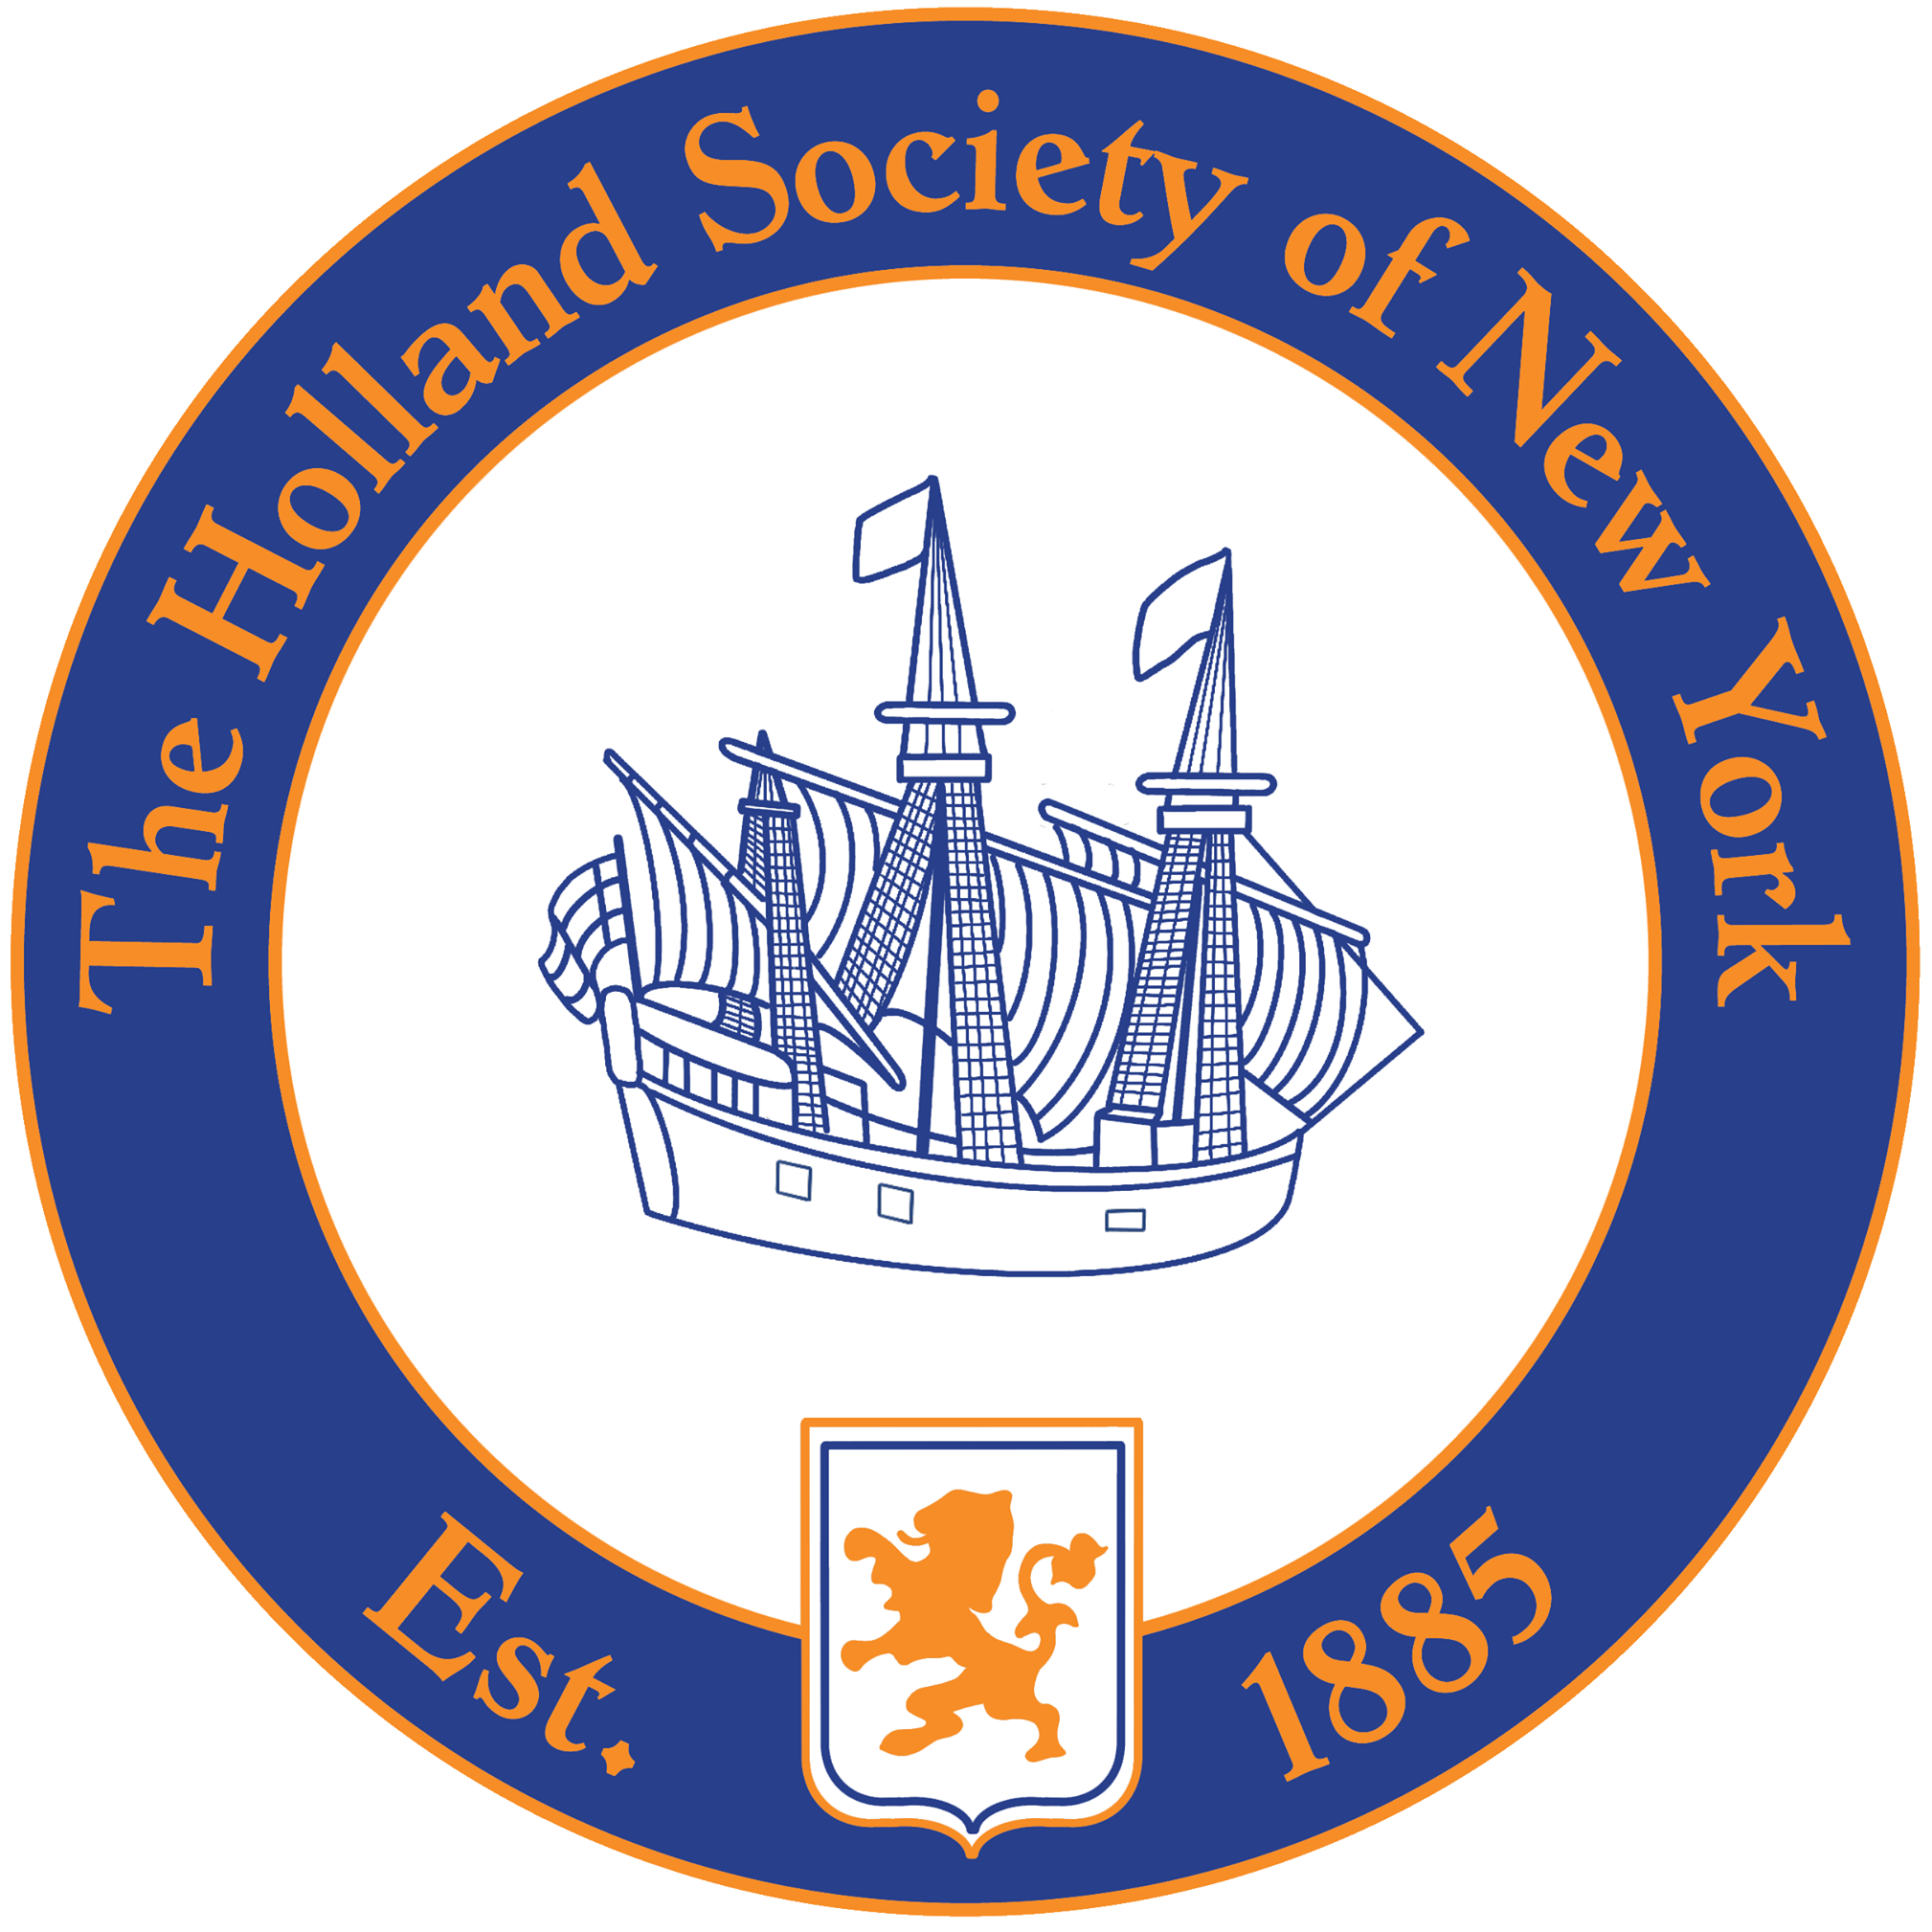 Dutch Organization in New York NY - The Holland Society of New York